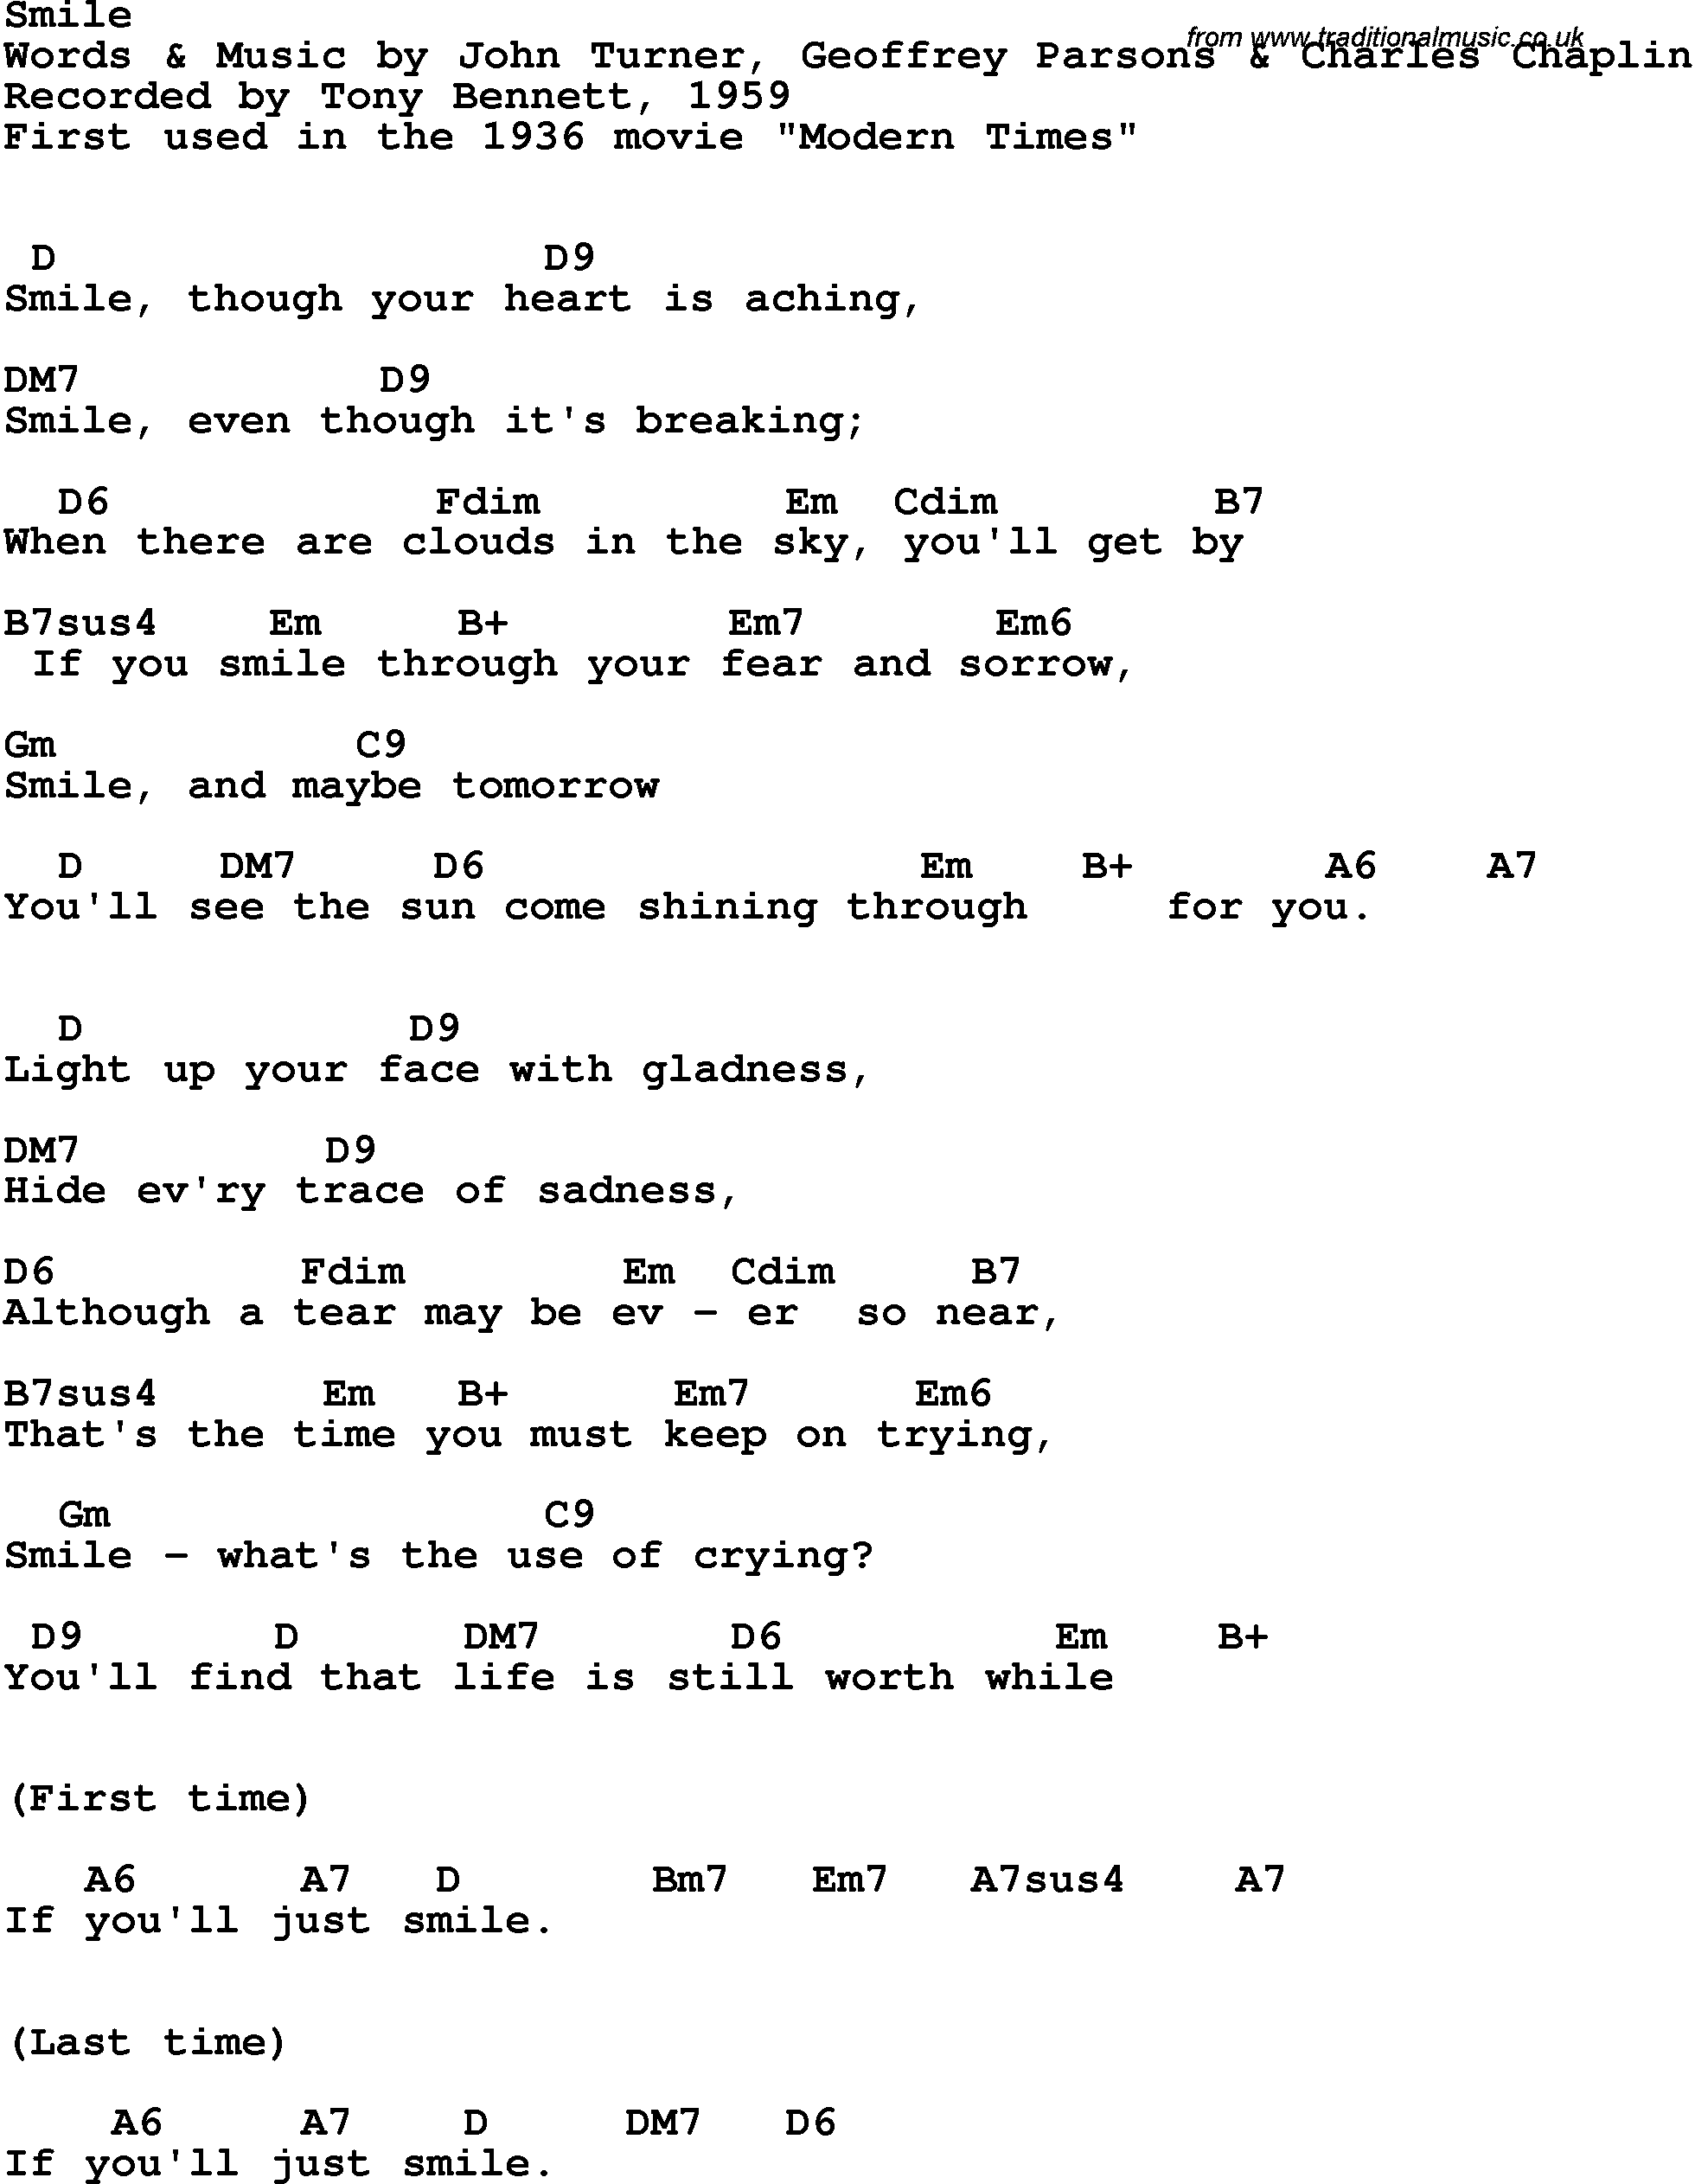 Song Lyrics with guitar chords for Smile - Tony Bennett, 1959